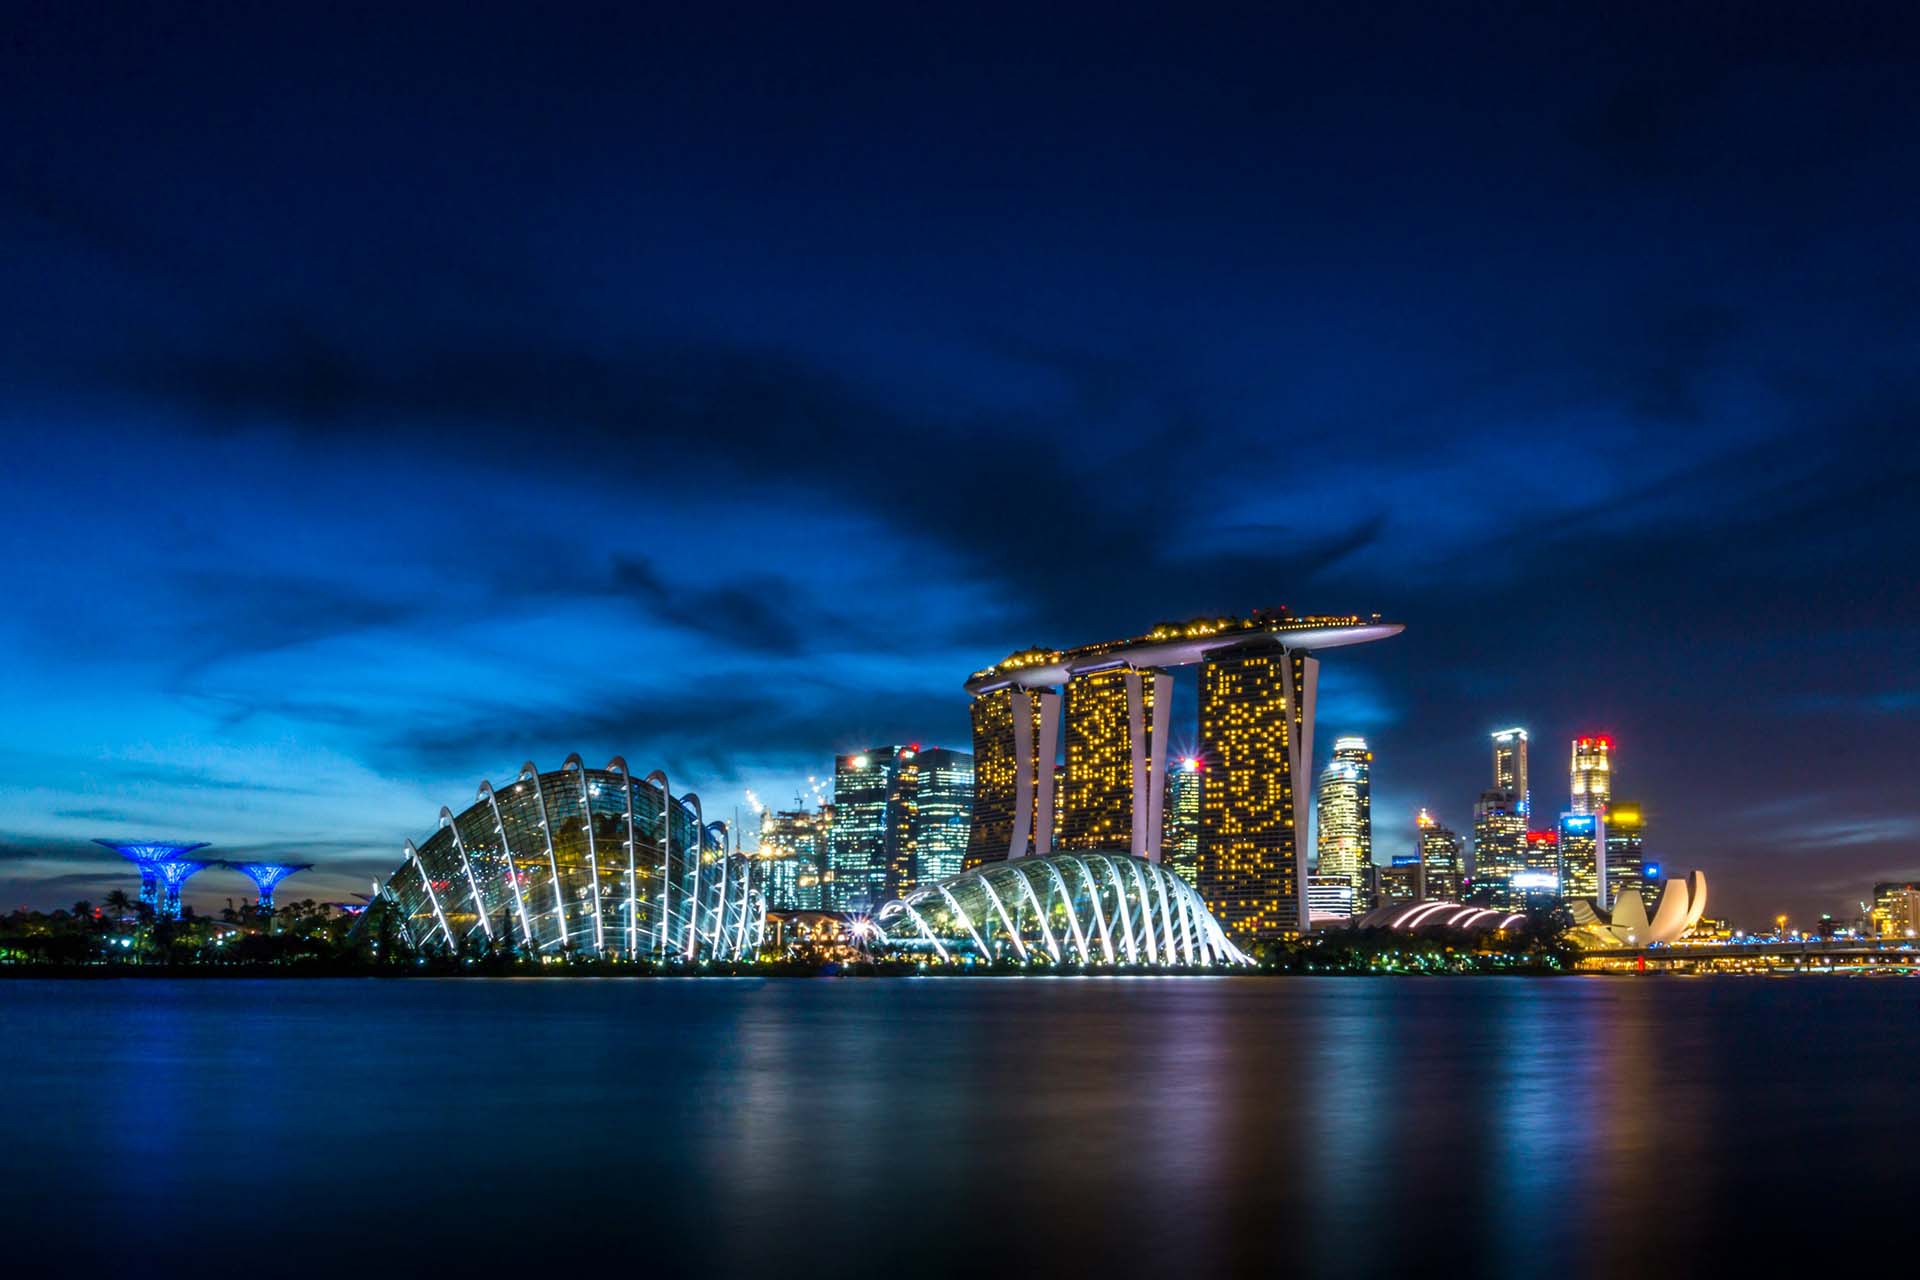 San Marina Bay, Singapore at night